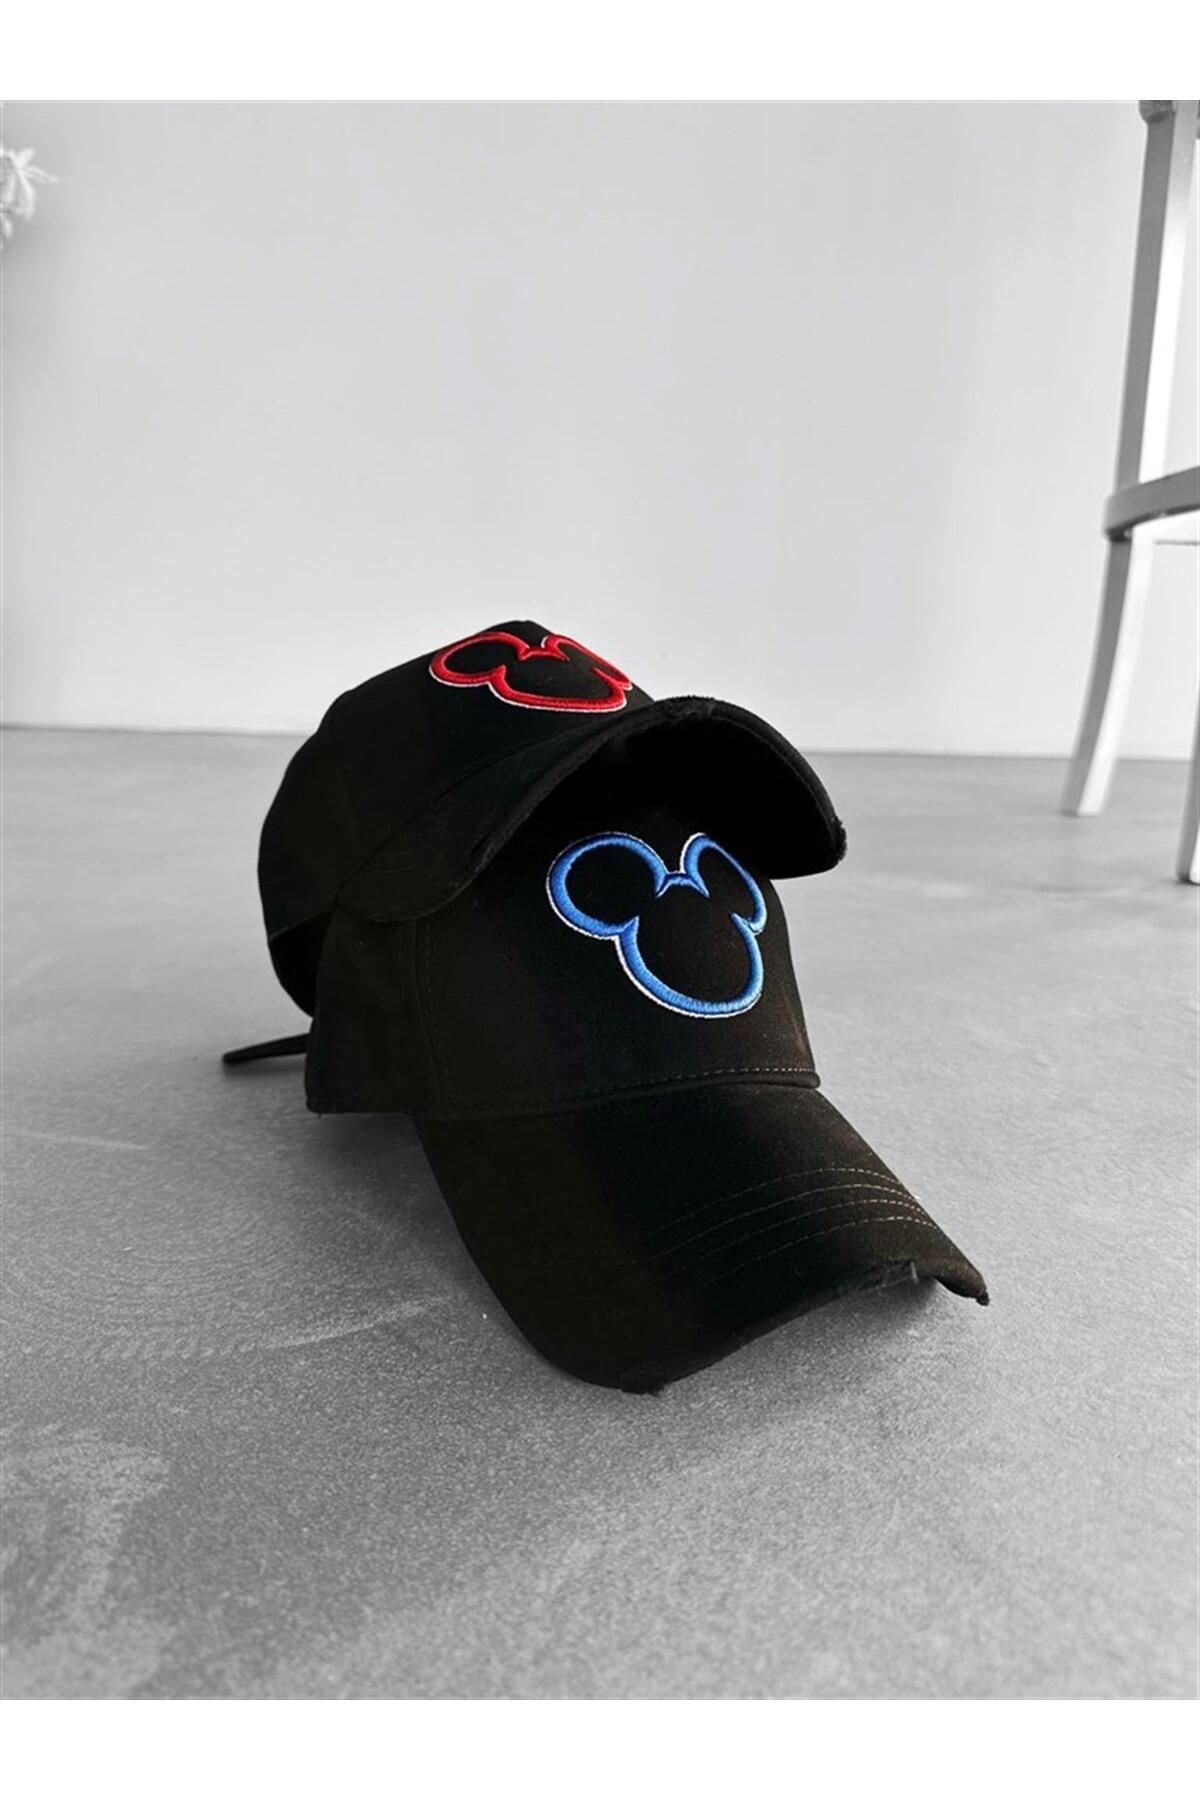 ablukaonline Mickey Mouse Silüet Şapka Kırmızı SPK.0001